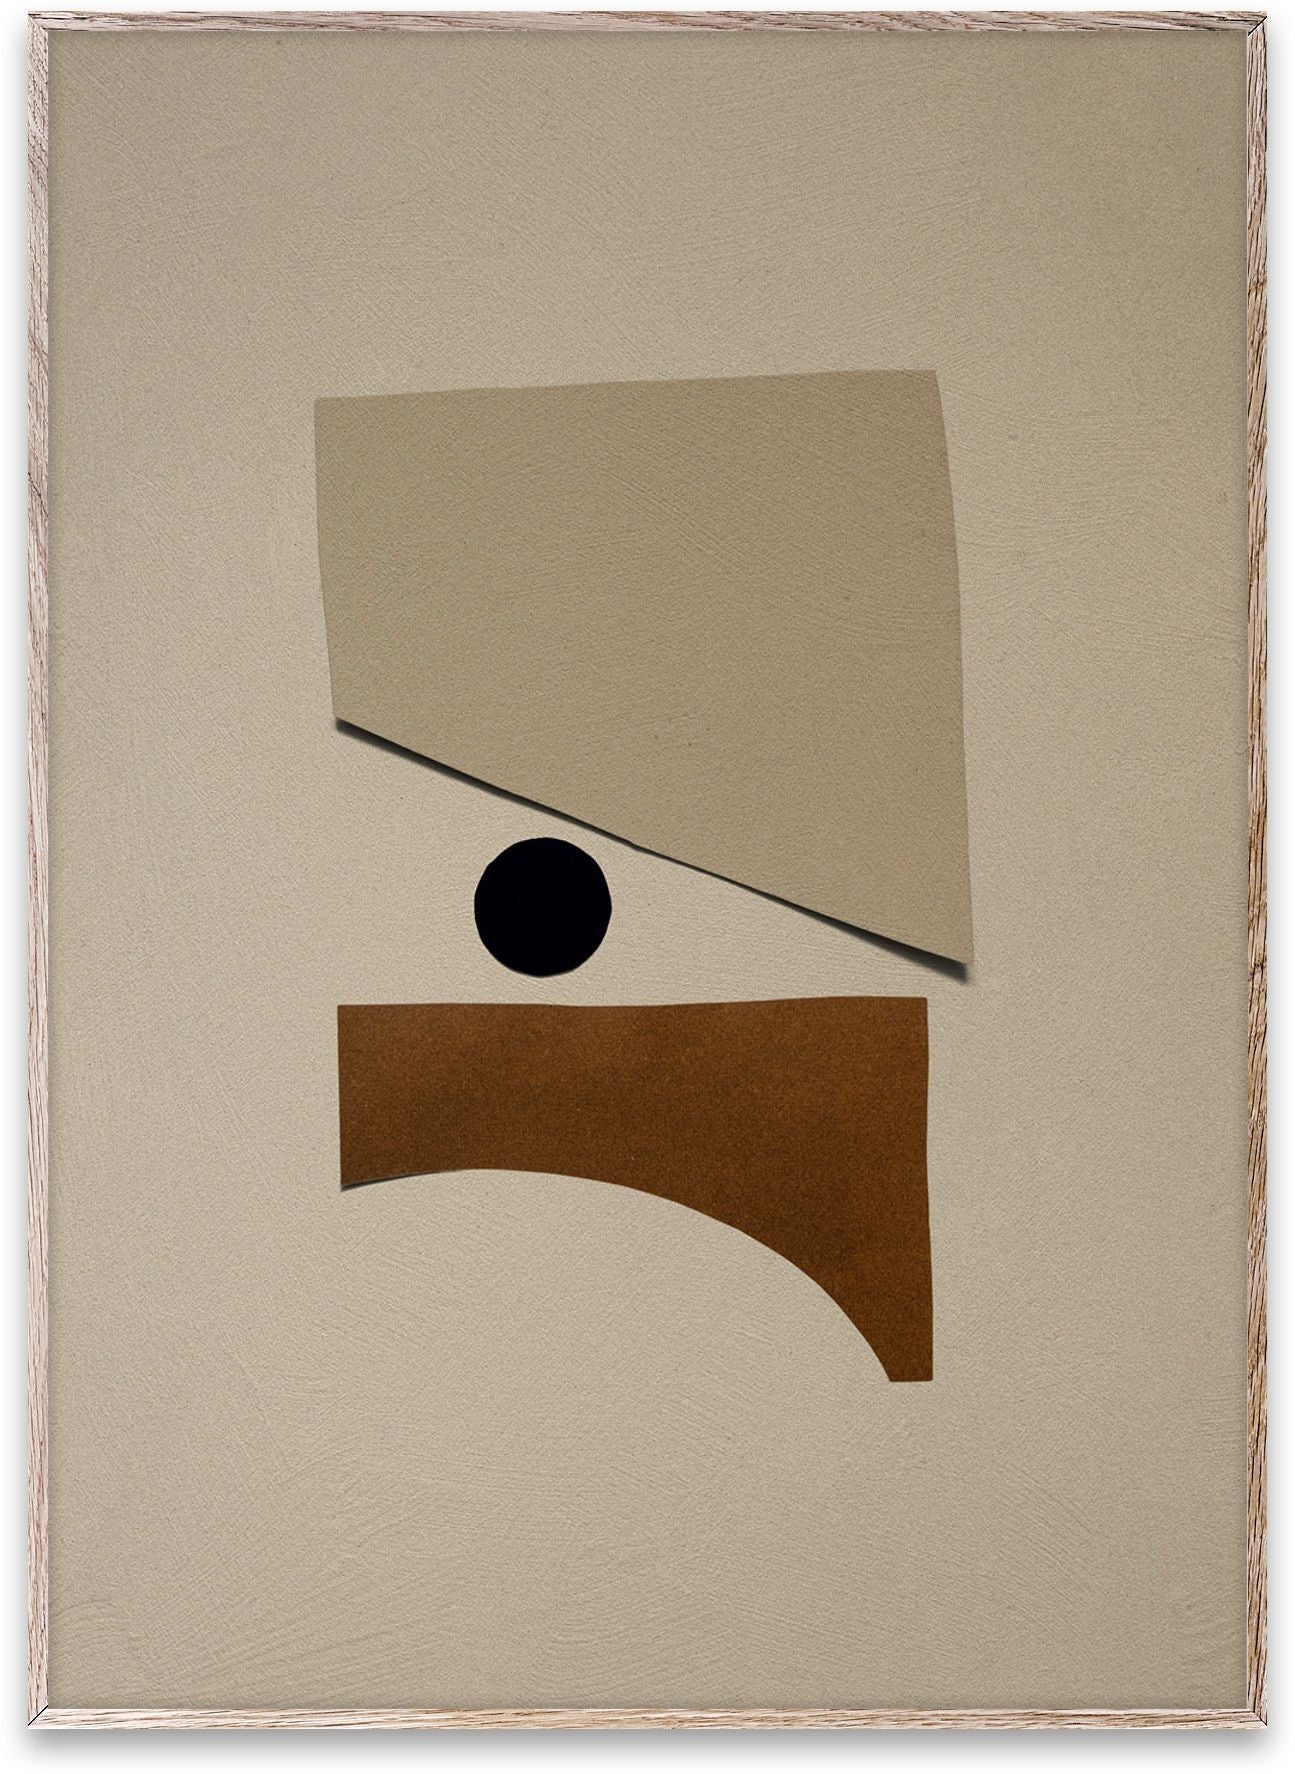 Paper Collective Tippepunkt 01 plakat, 70x100 cm